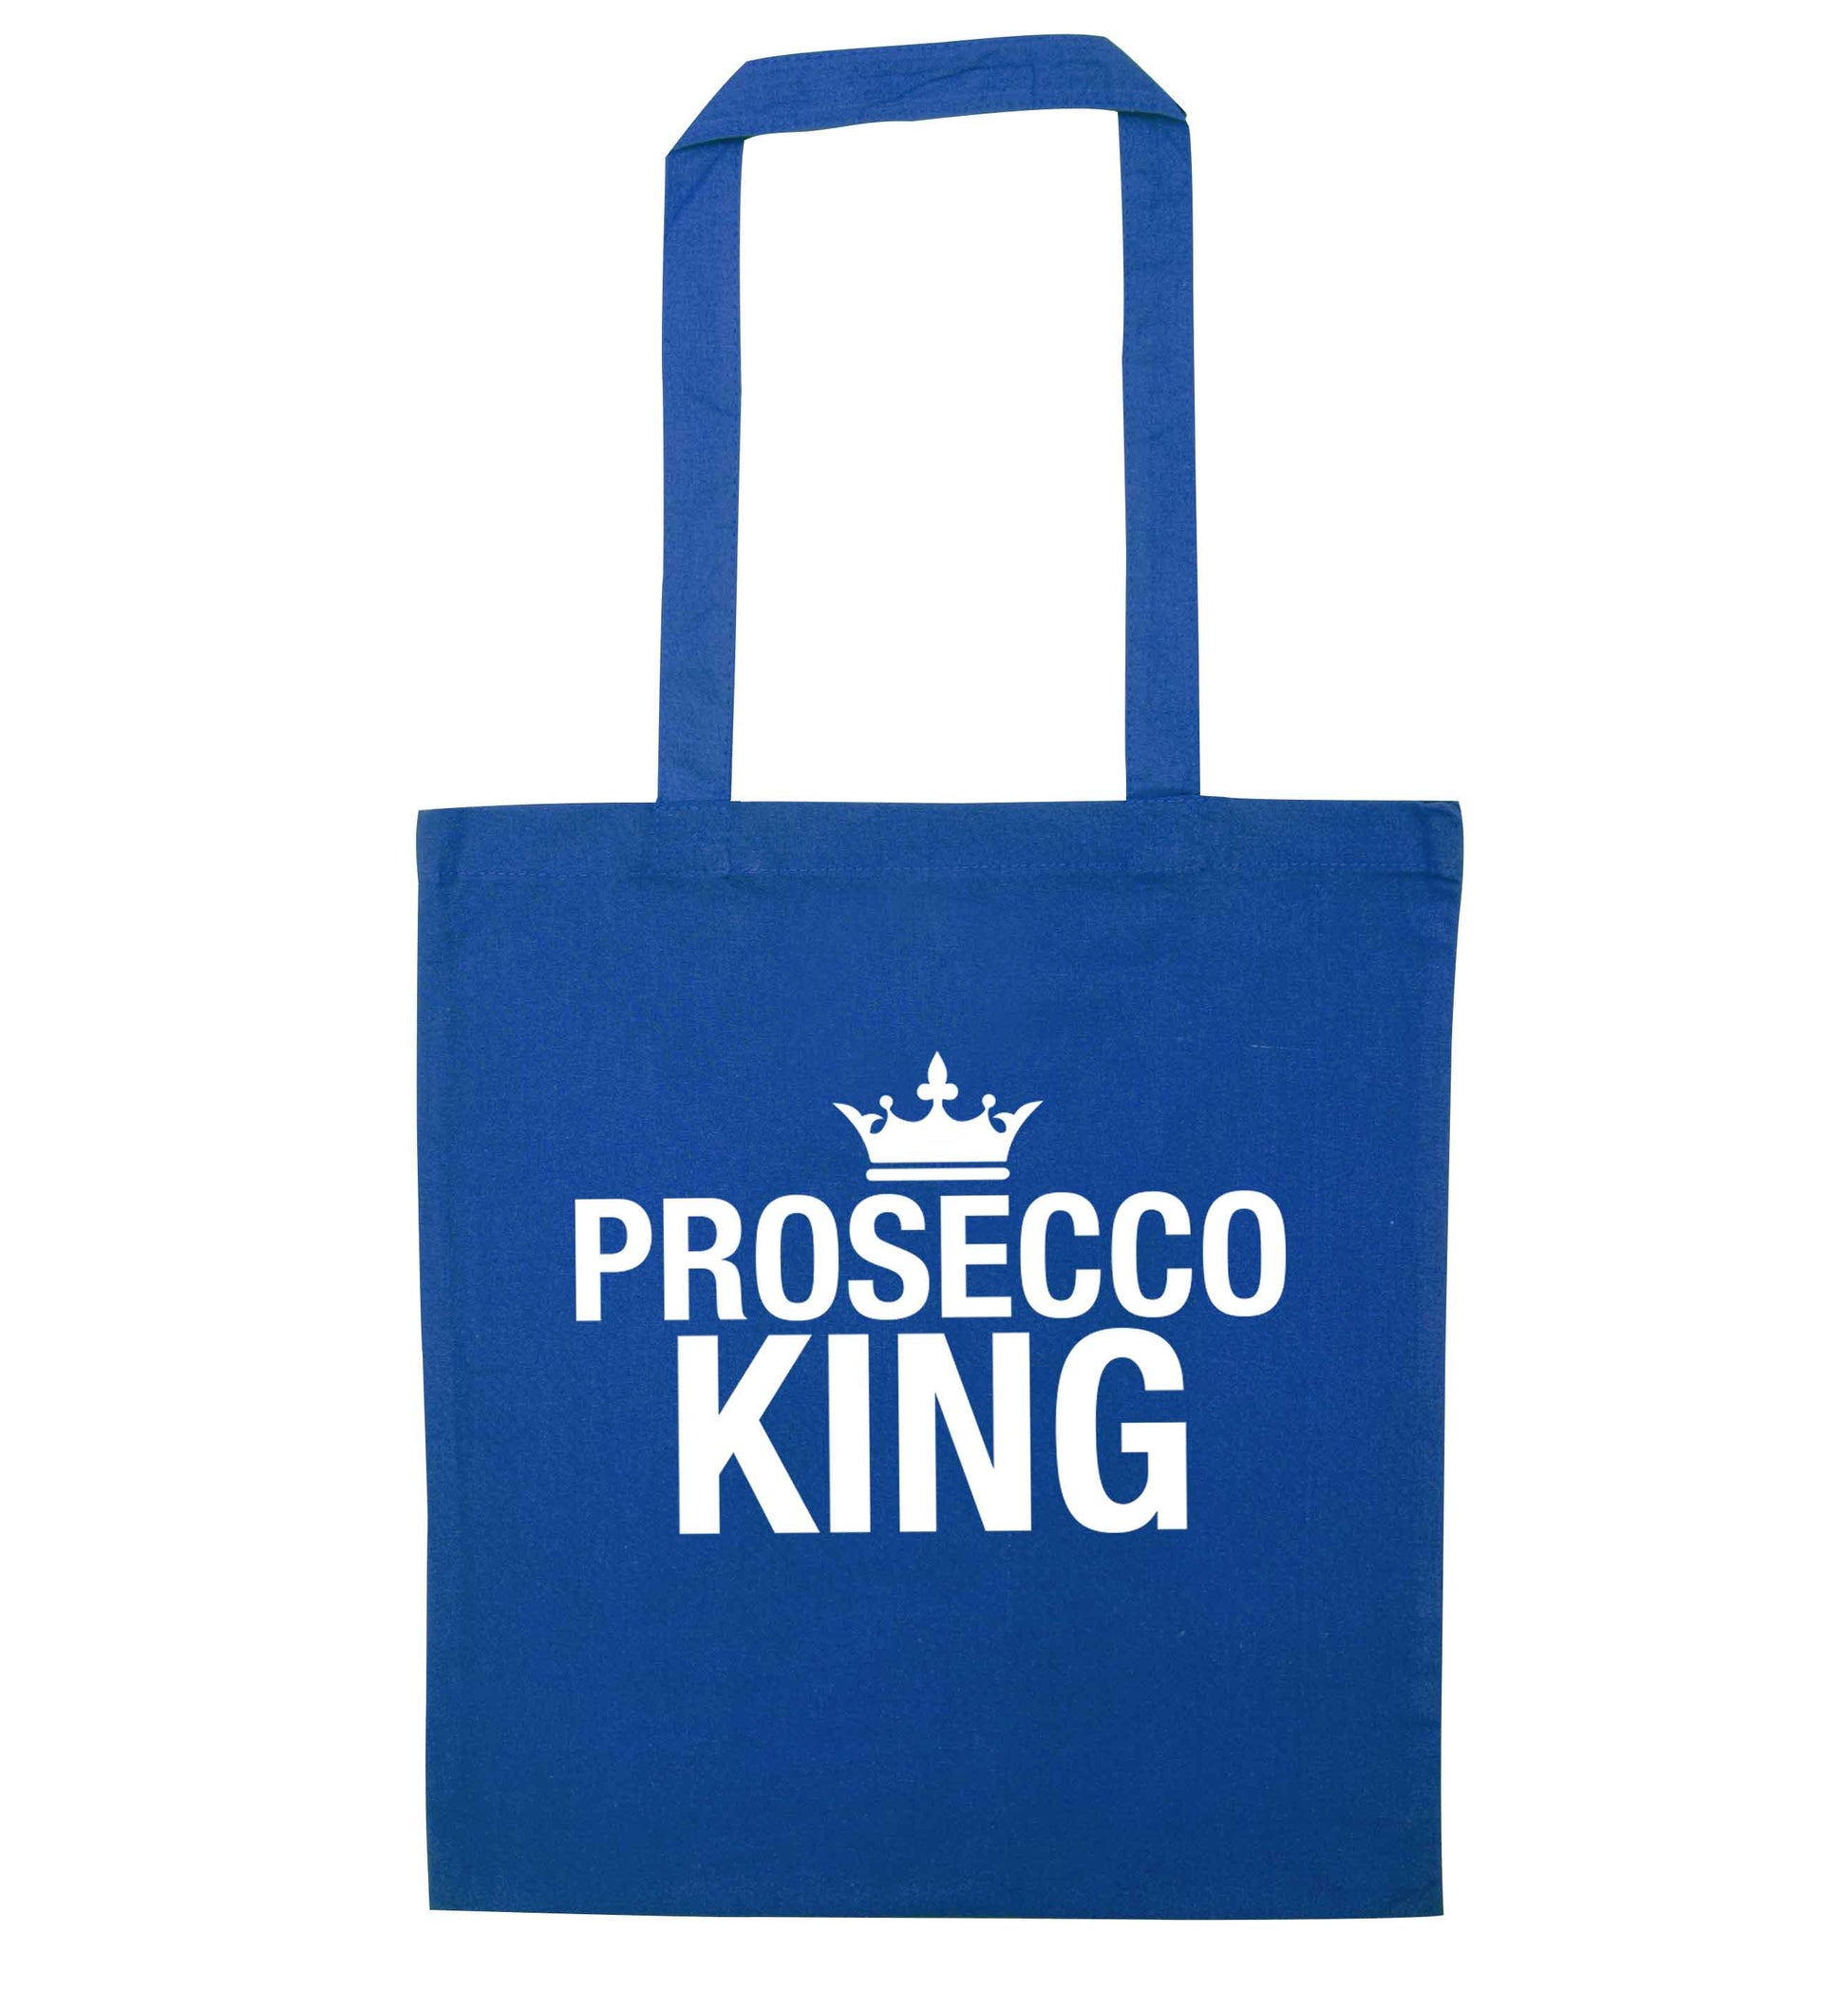 Prosecco king blue tote bag